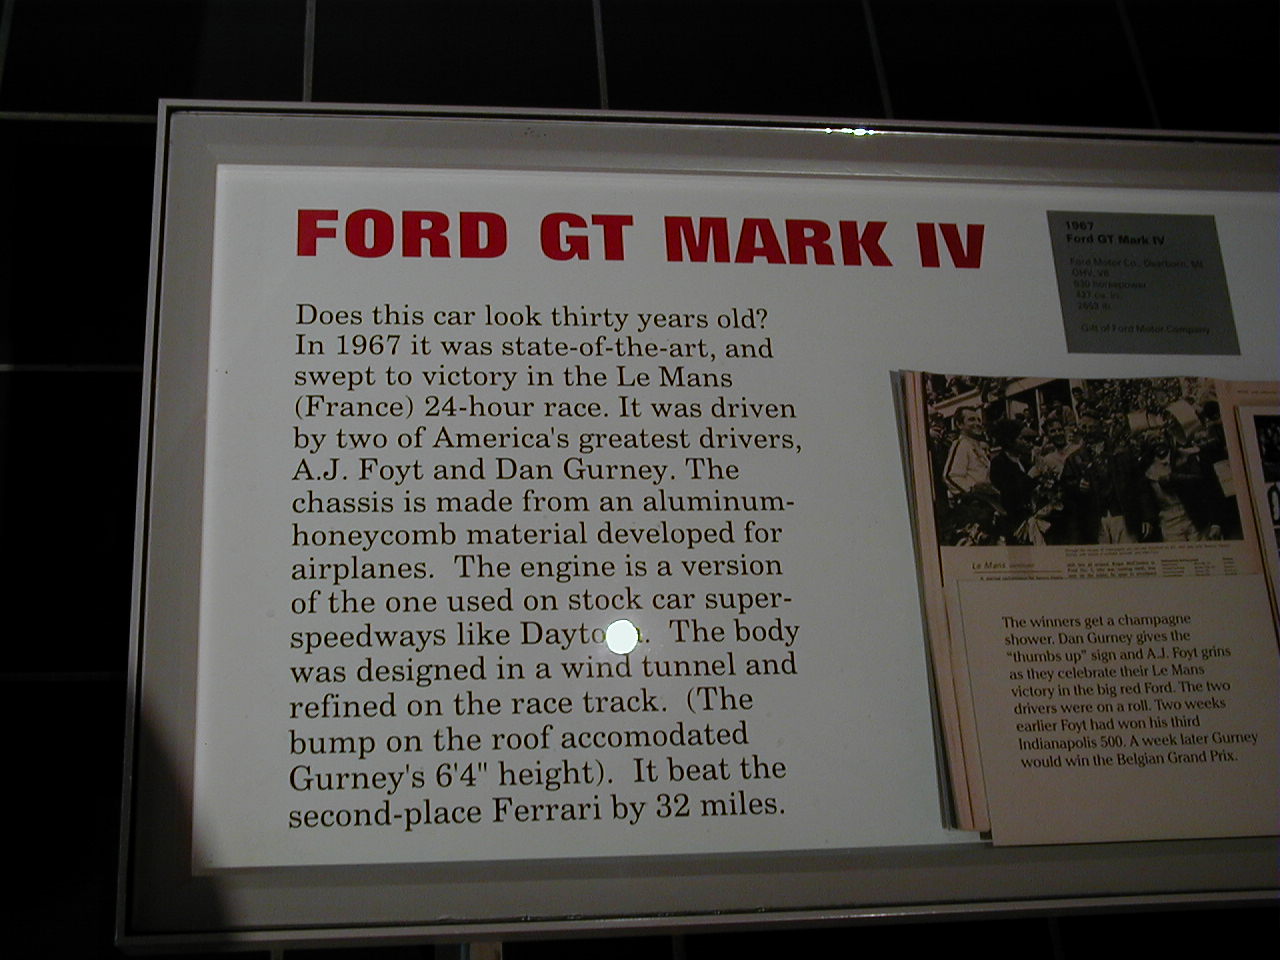 1967 Ford GT Mark IV, description